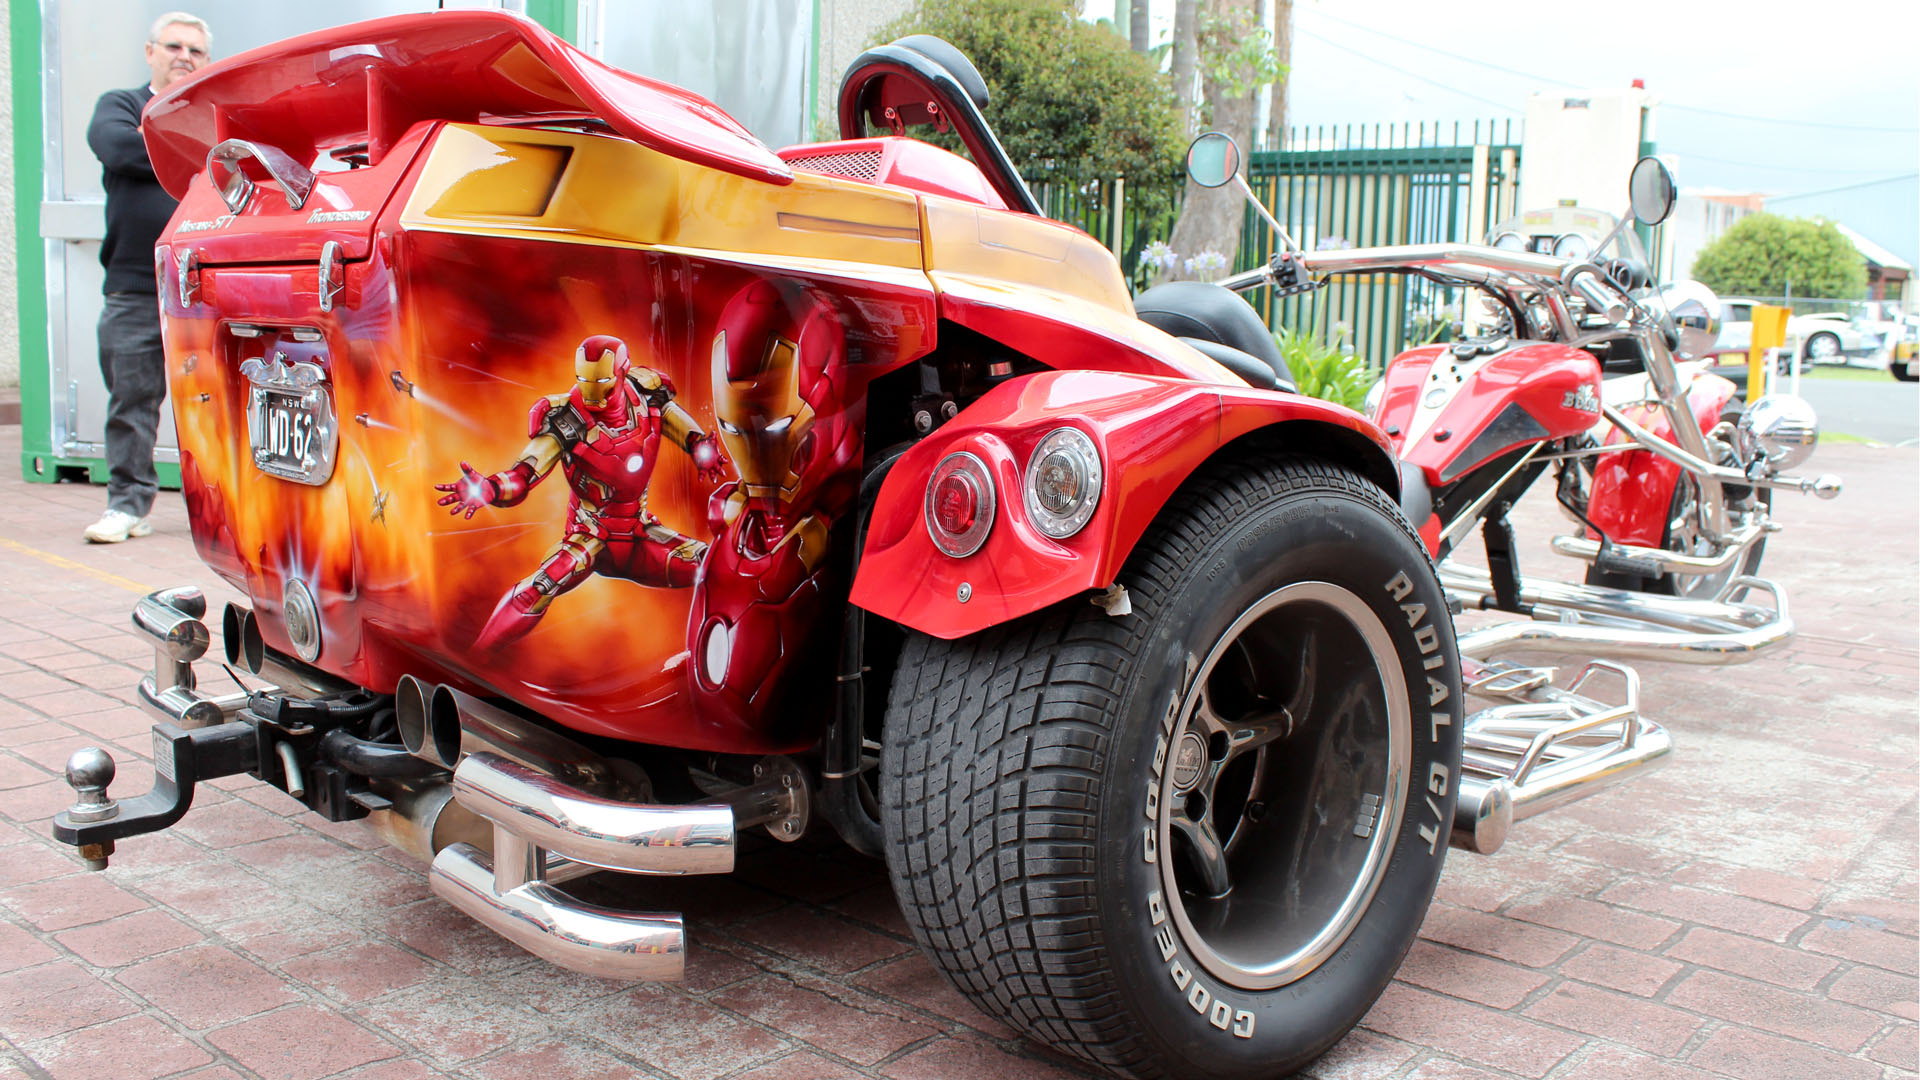 Trike - Iron Man Themed